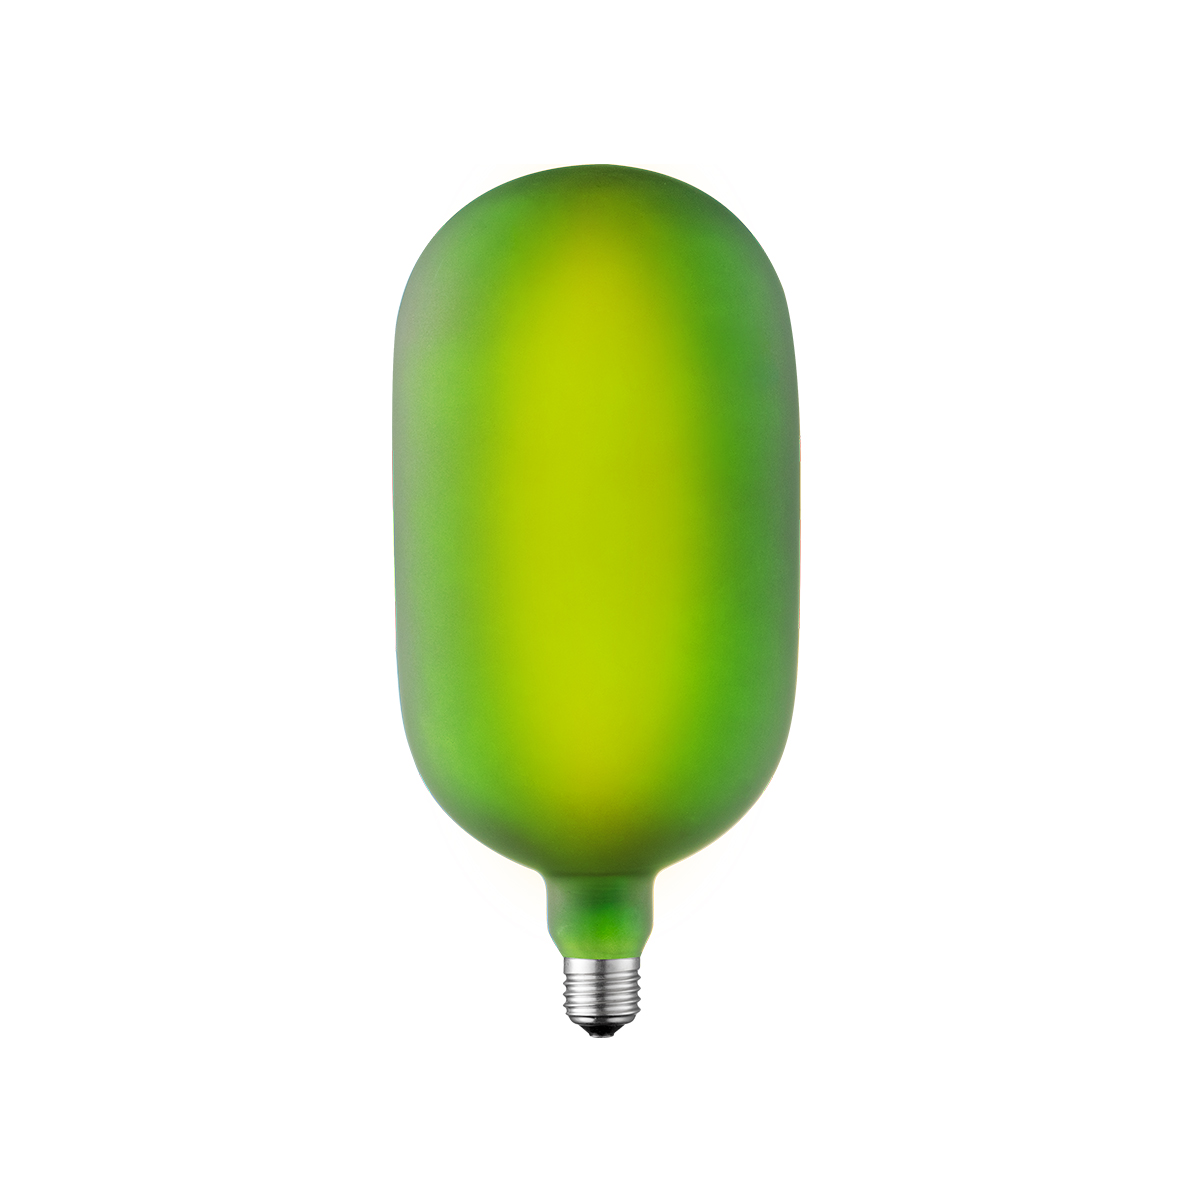 Tangla lighting - TLB-9001-04GN - LED Light Bulb Single Spiral filament - 4W green opal - medium - non dimmable - E27